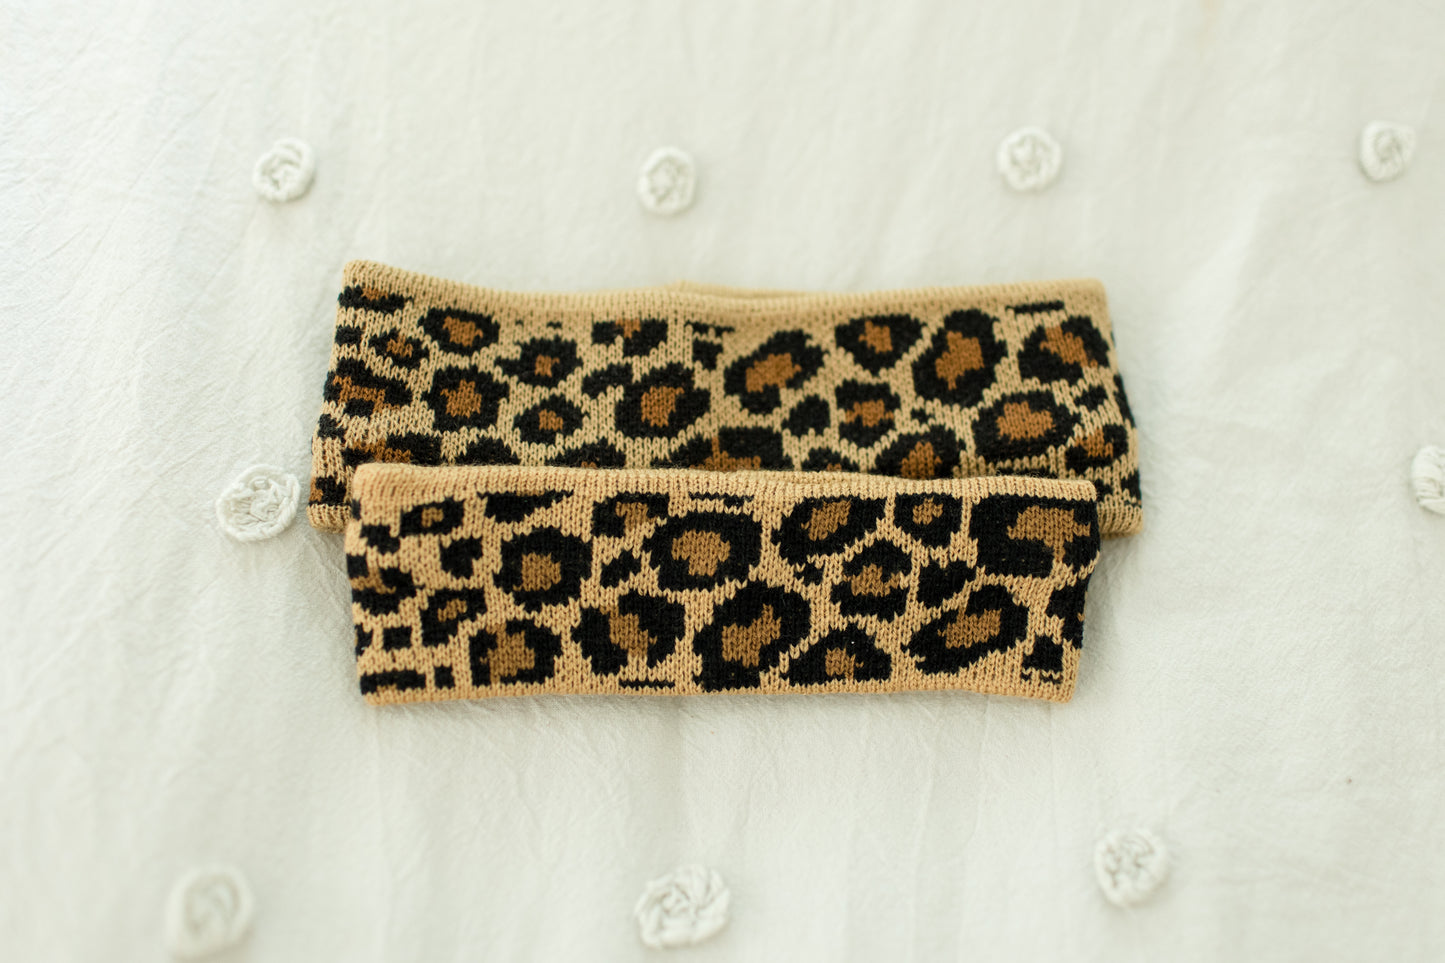 Leopard Mommy & Me Knit Headbands